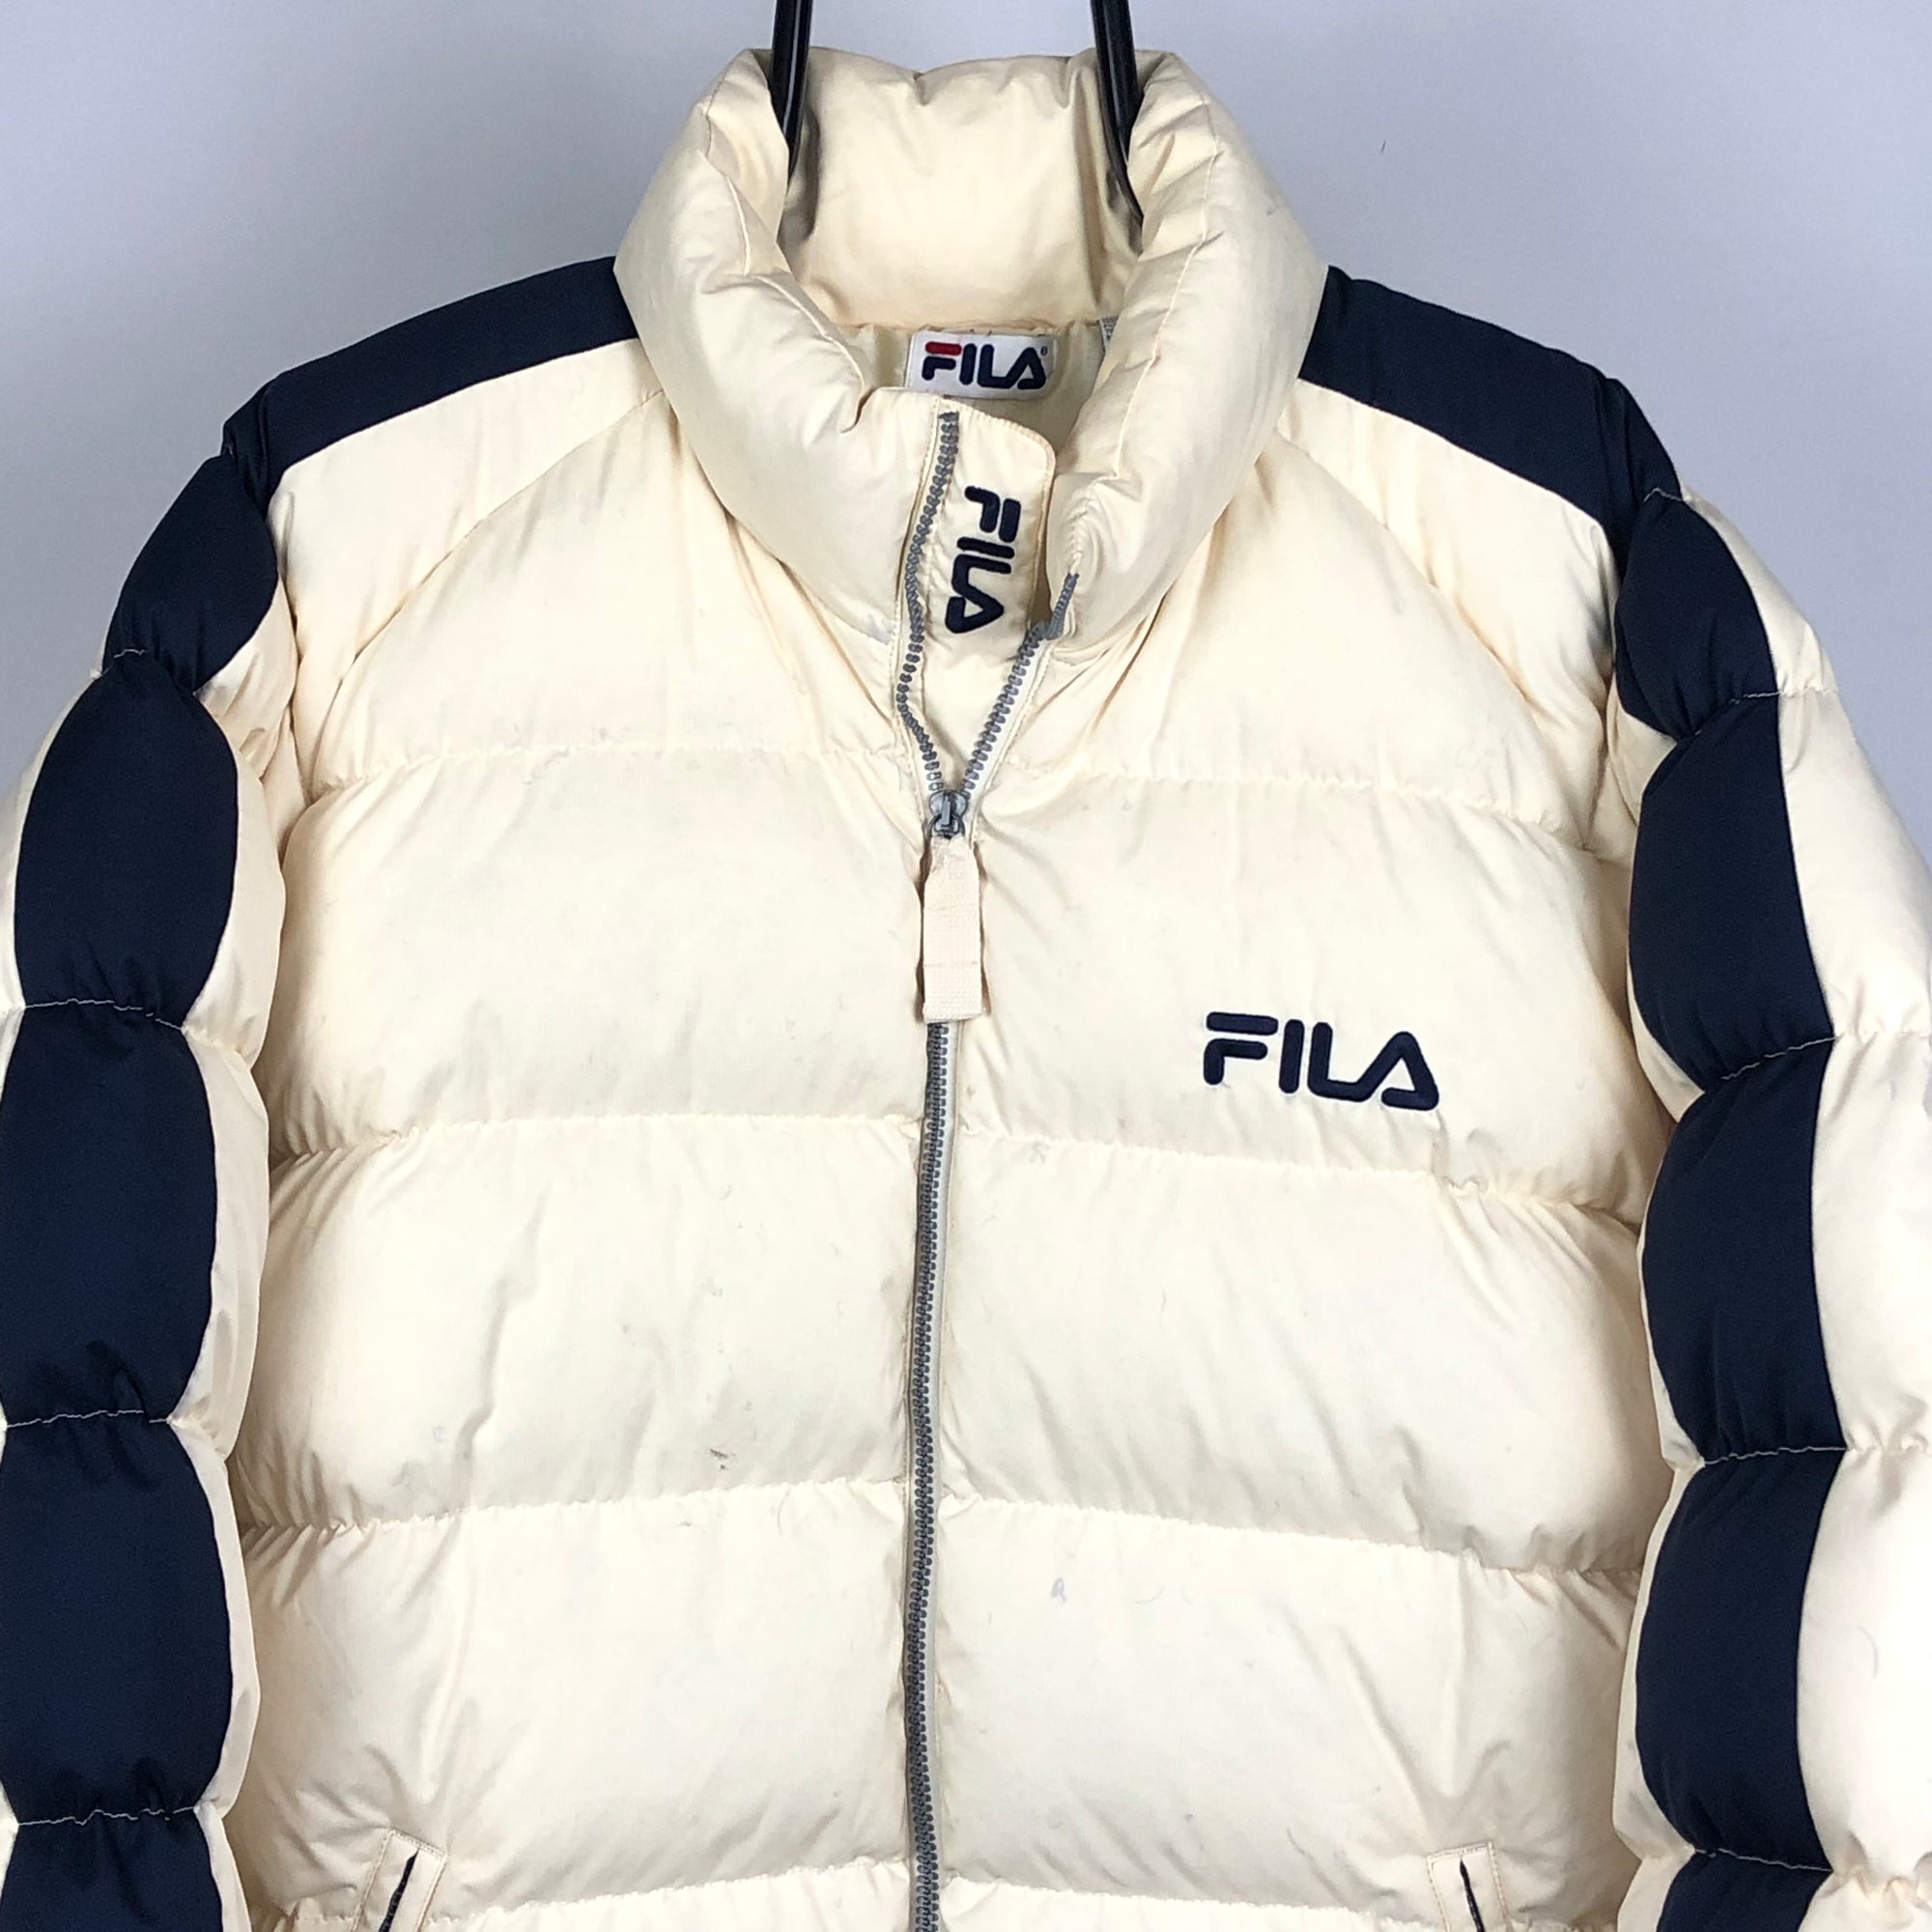 Vintage Fila Puffer Jacket in Cream & Navy - Men's XL/Women's XXL